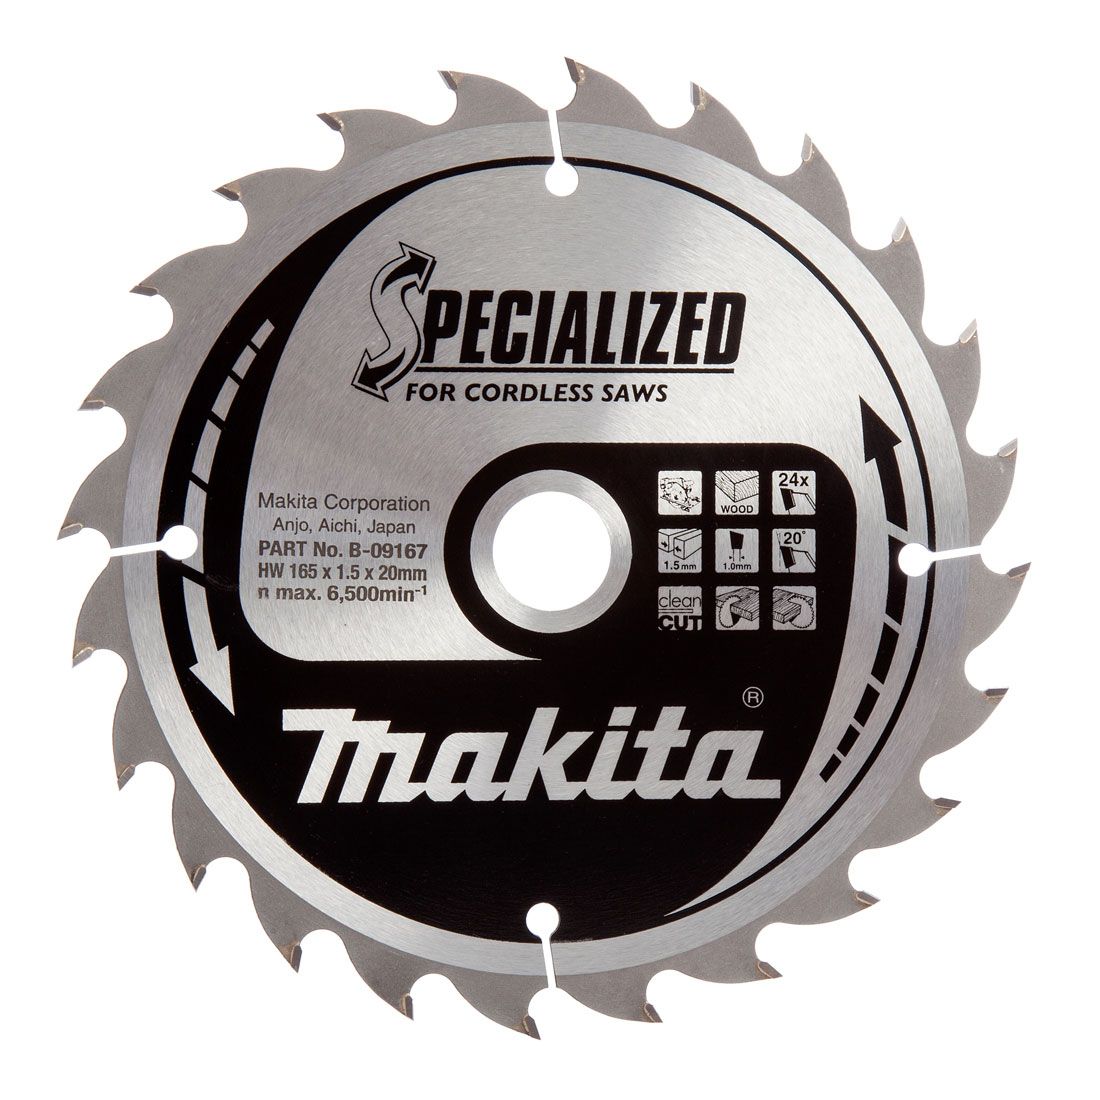 New Genuine Makita B-22006 136mm x 20mm x 1,5 mm 36T Circular Saw Blade DSS501 